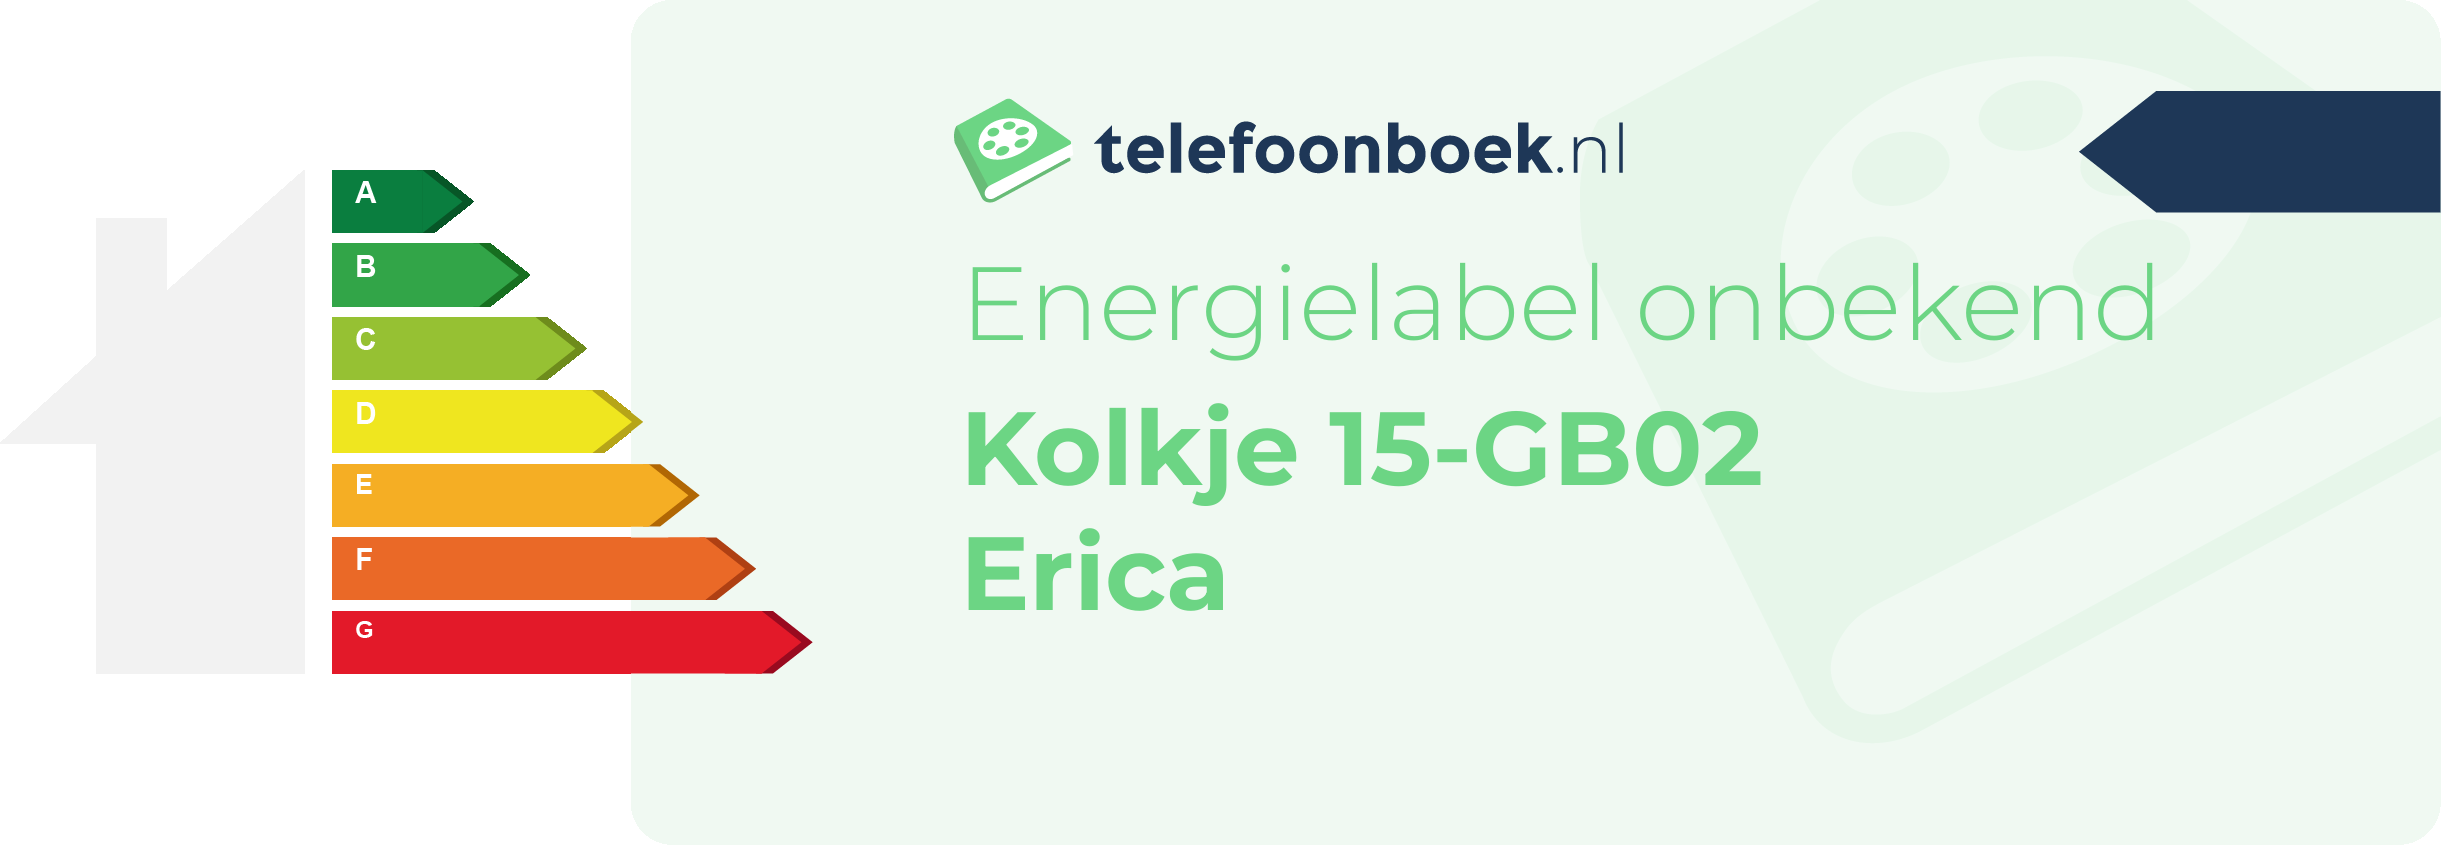 Energielabel Kolkje 15-GB02 Erica